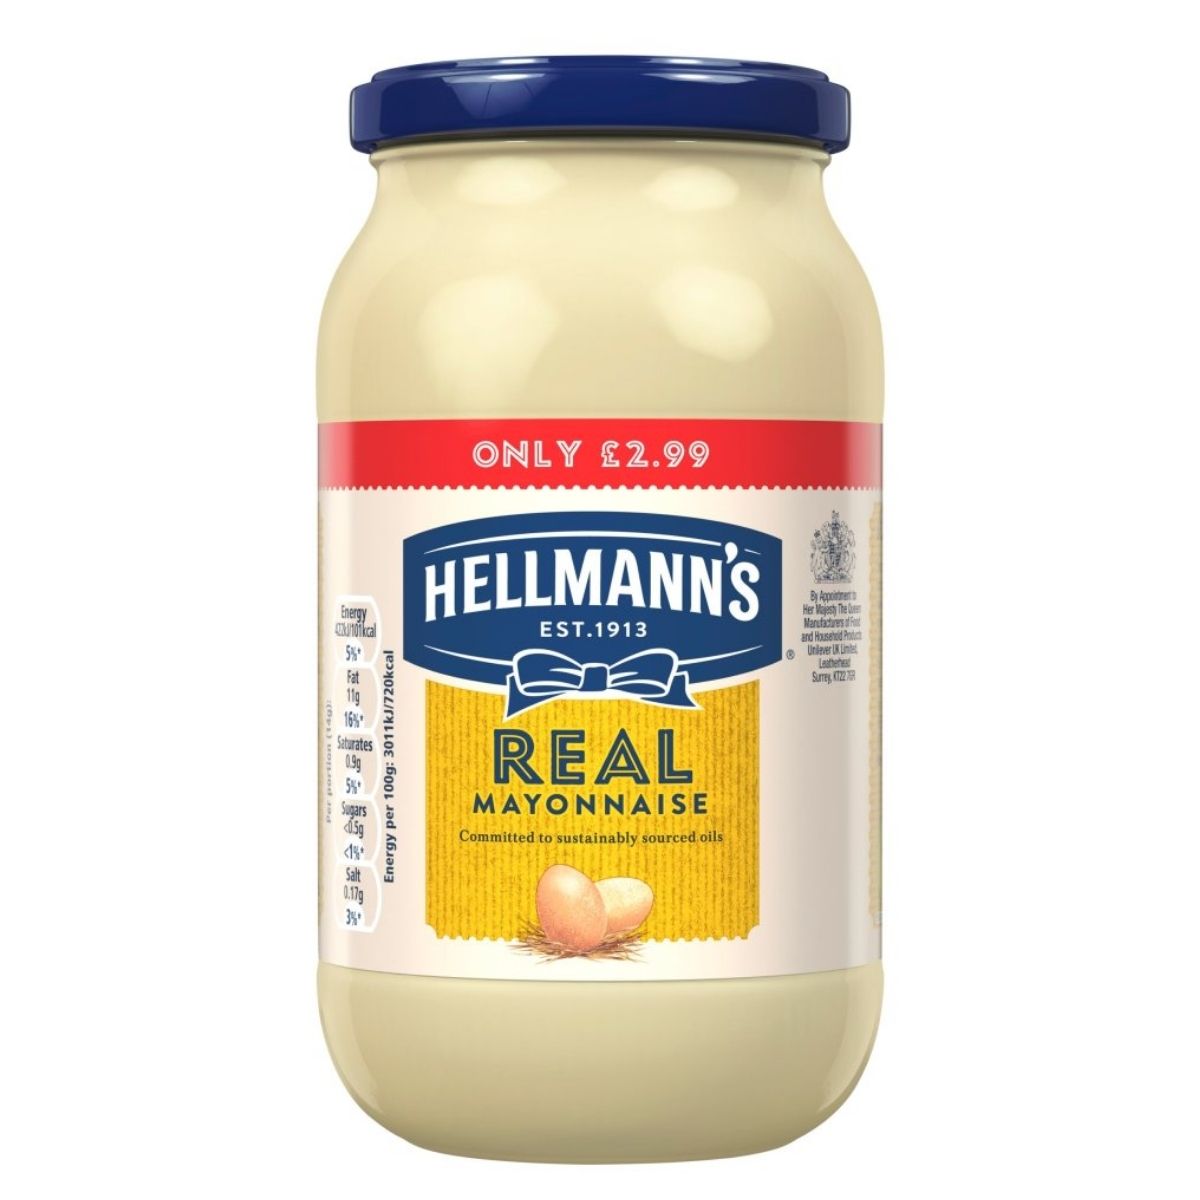 Hellmanns - Real Mayonnaise Jar - 400g in a jar.